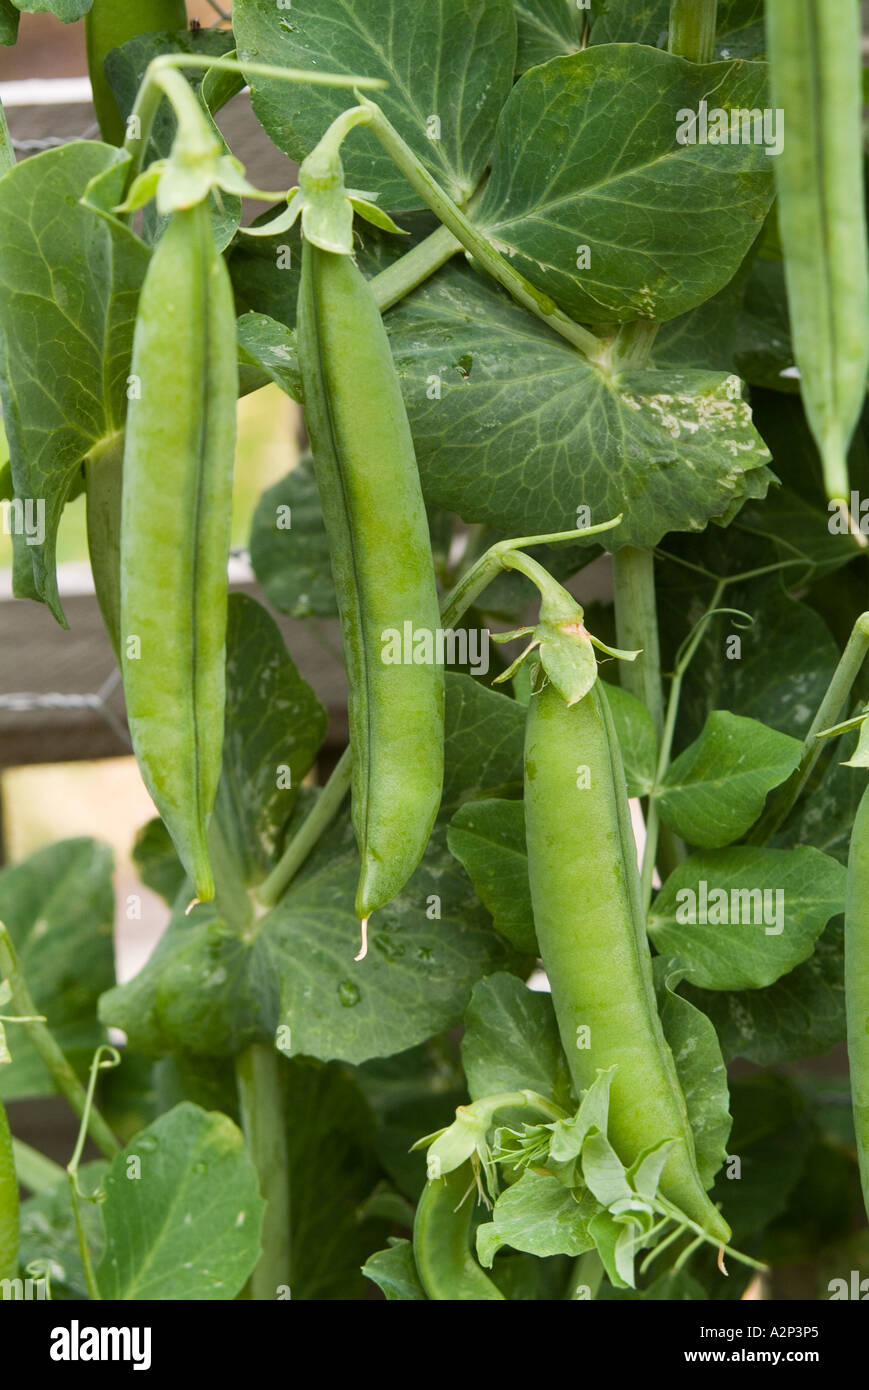 Greenfeast peas Stock Photo